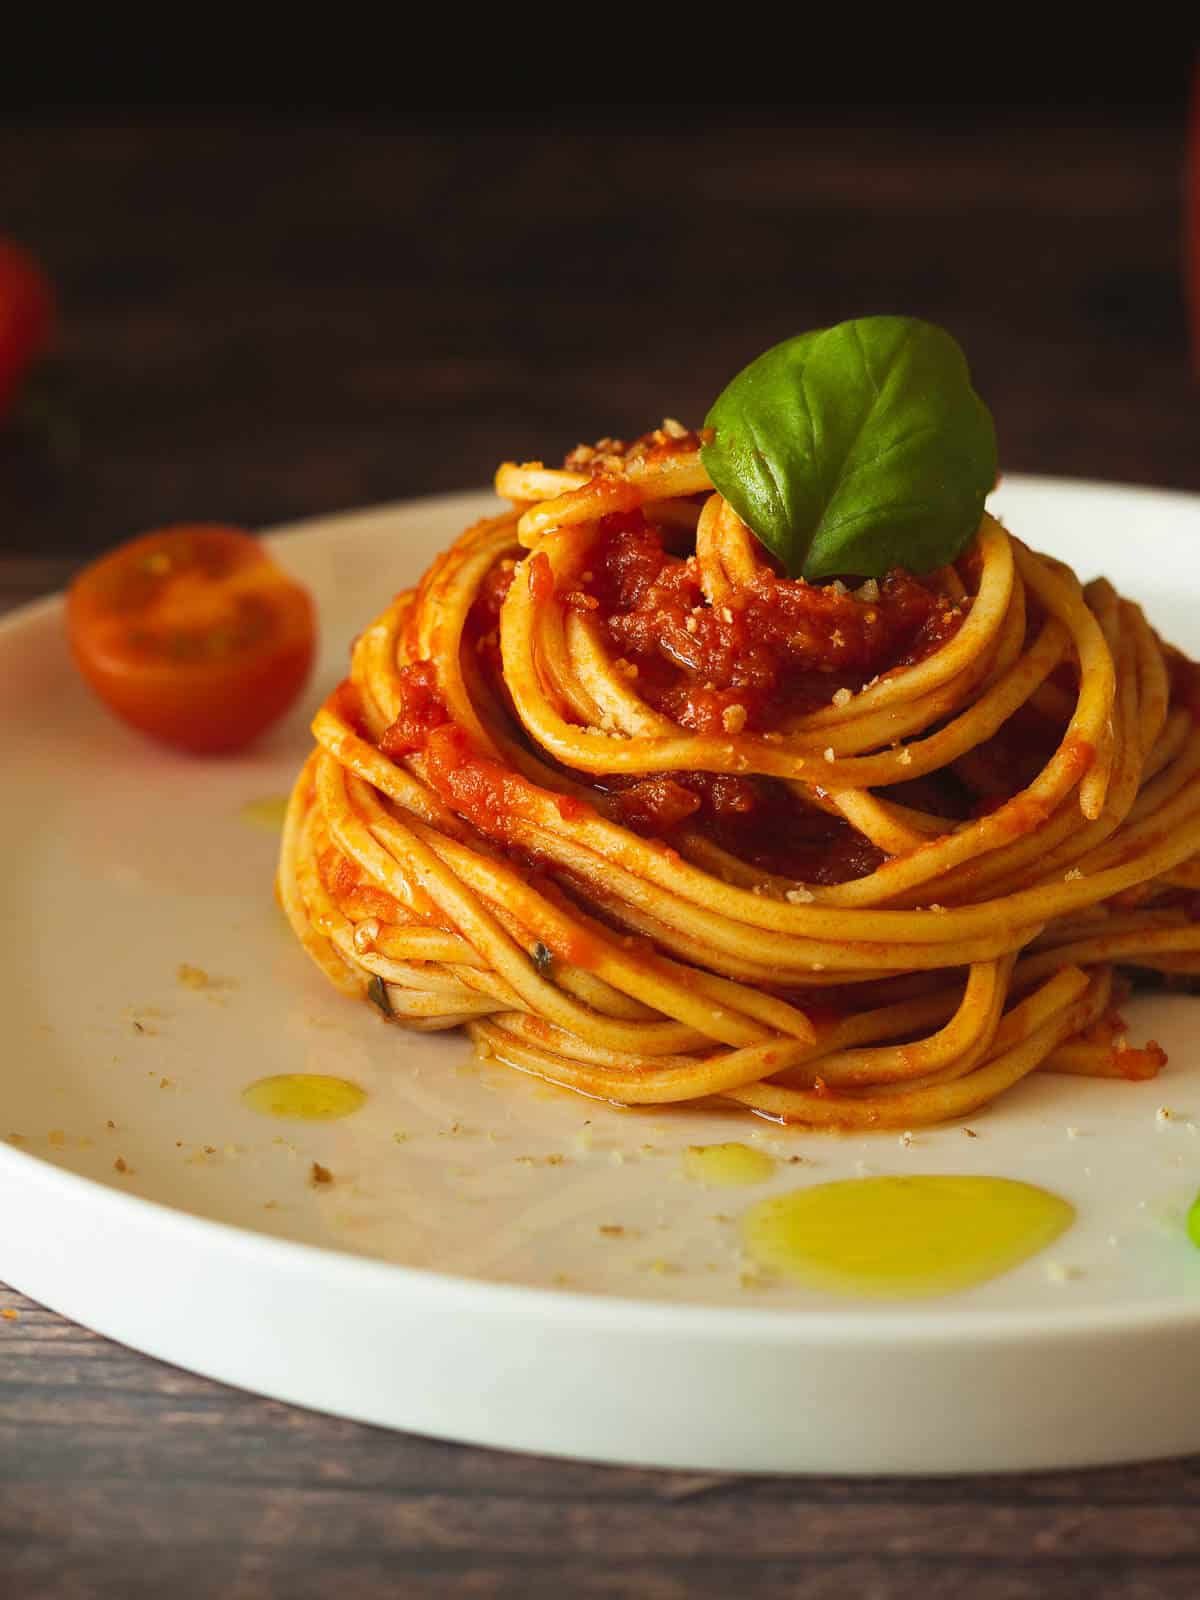 Vegan spaghetti with simple tomato sauce and basil